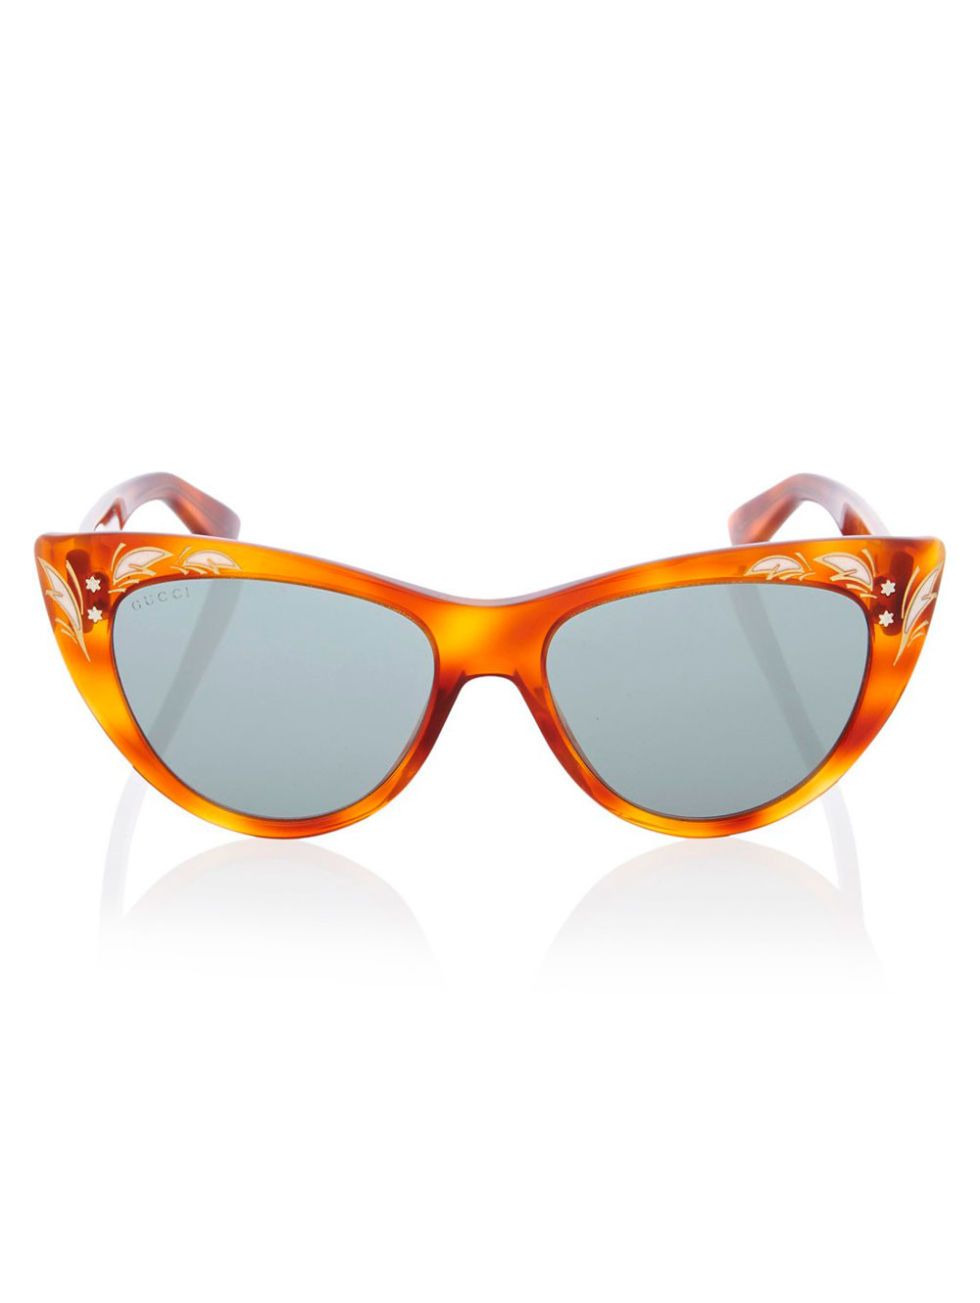 Eyewear, Sunglasses, Glasses, Orange, Personal protective equipment, Yellow, Brown, Vision care, Goggles, aviator sunglass, 